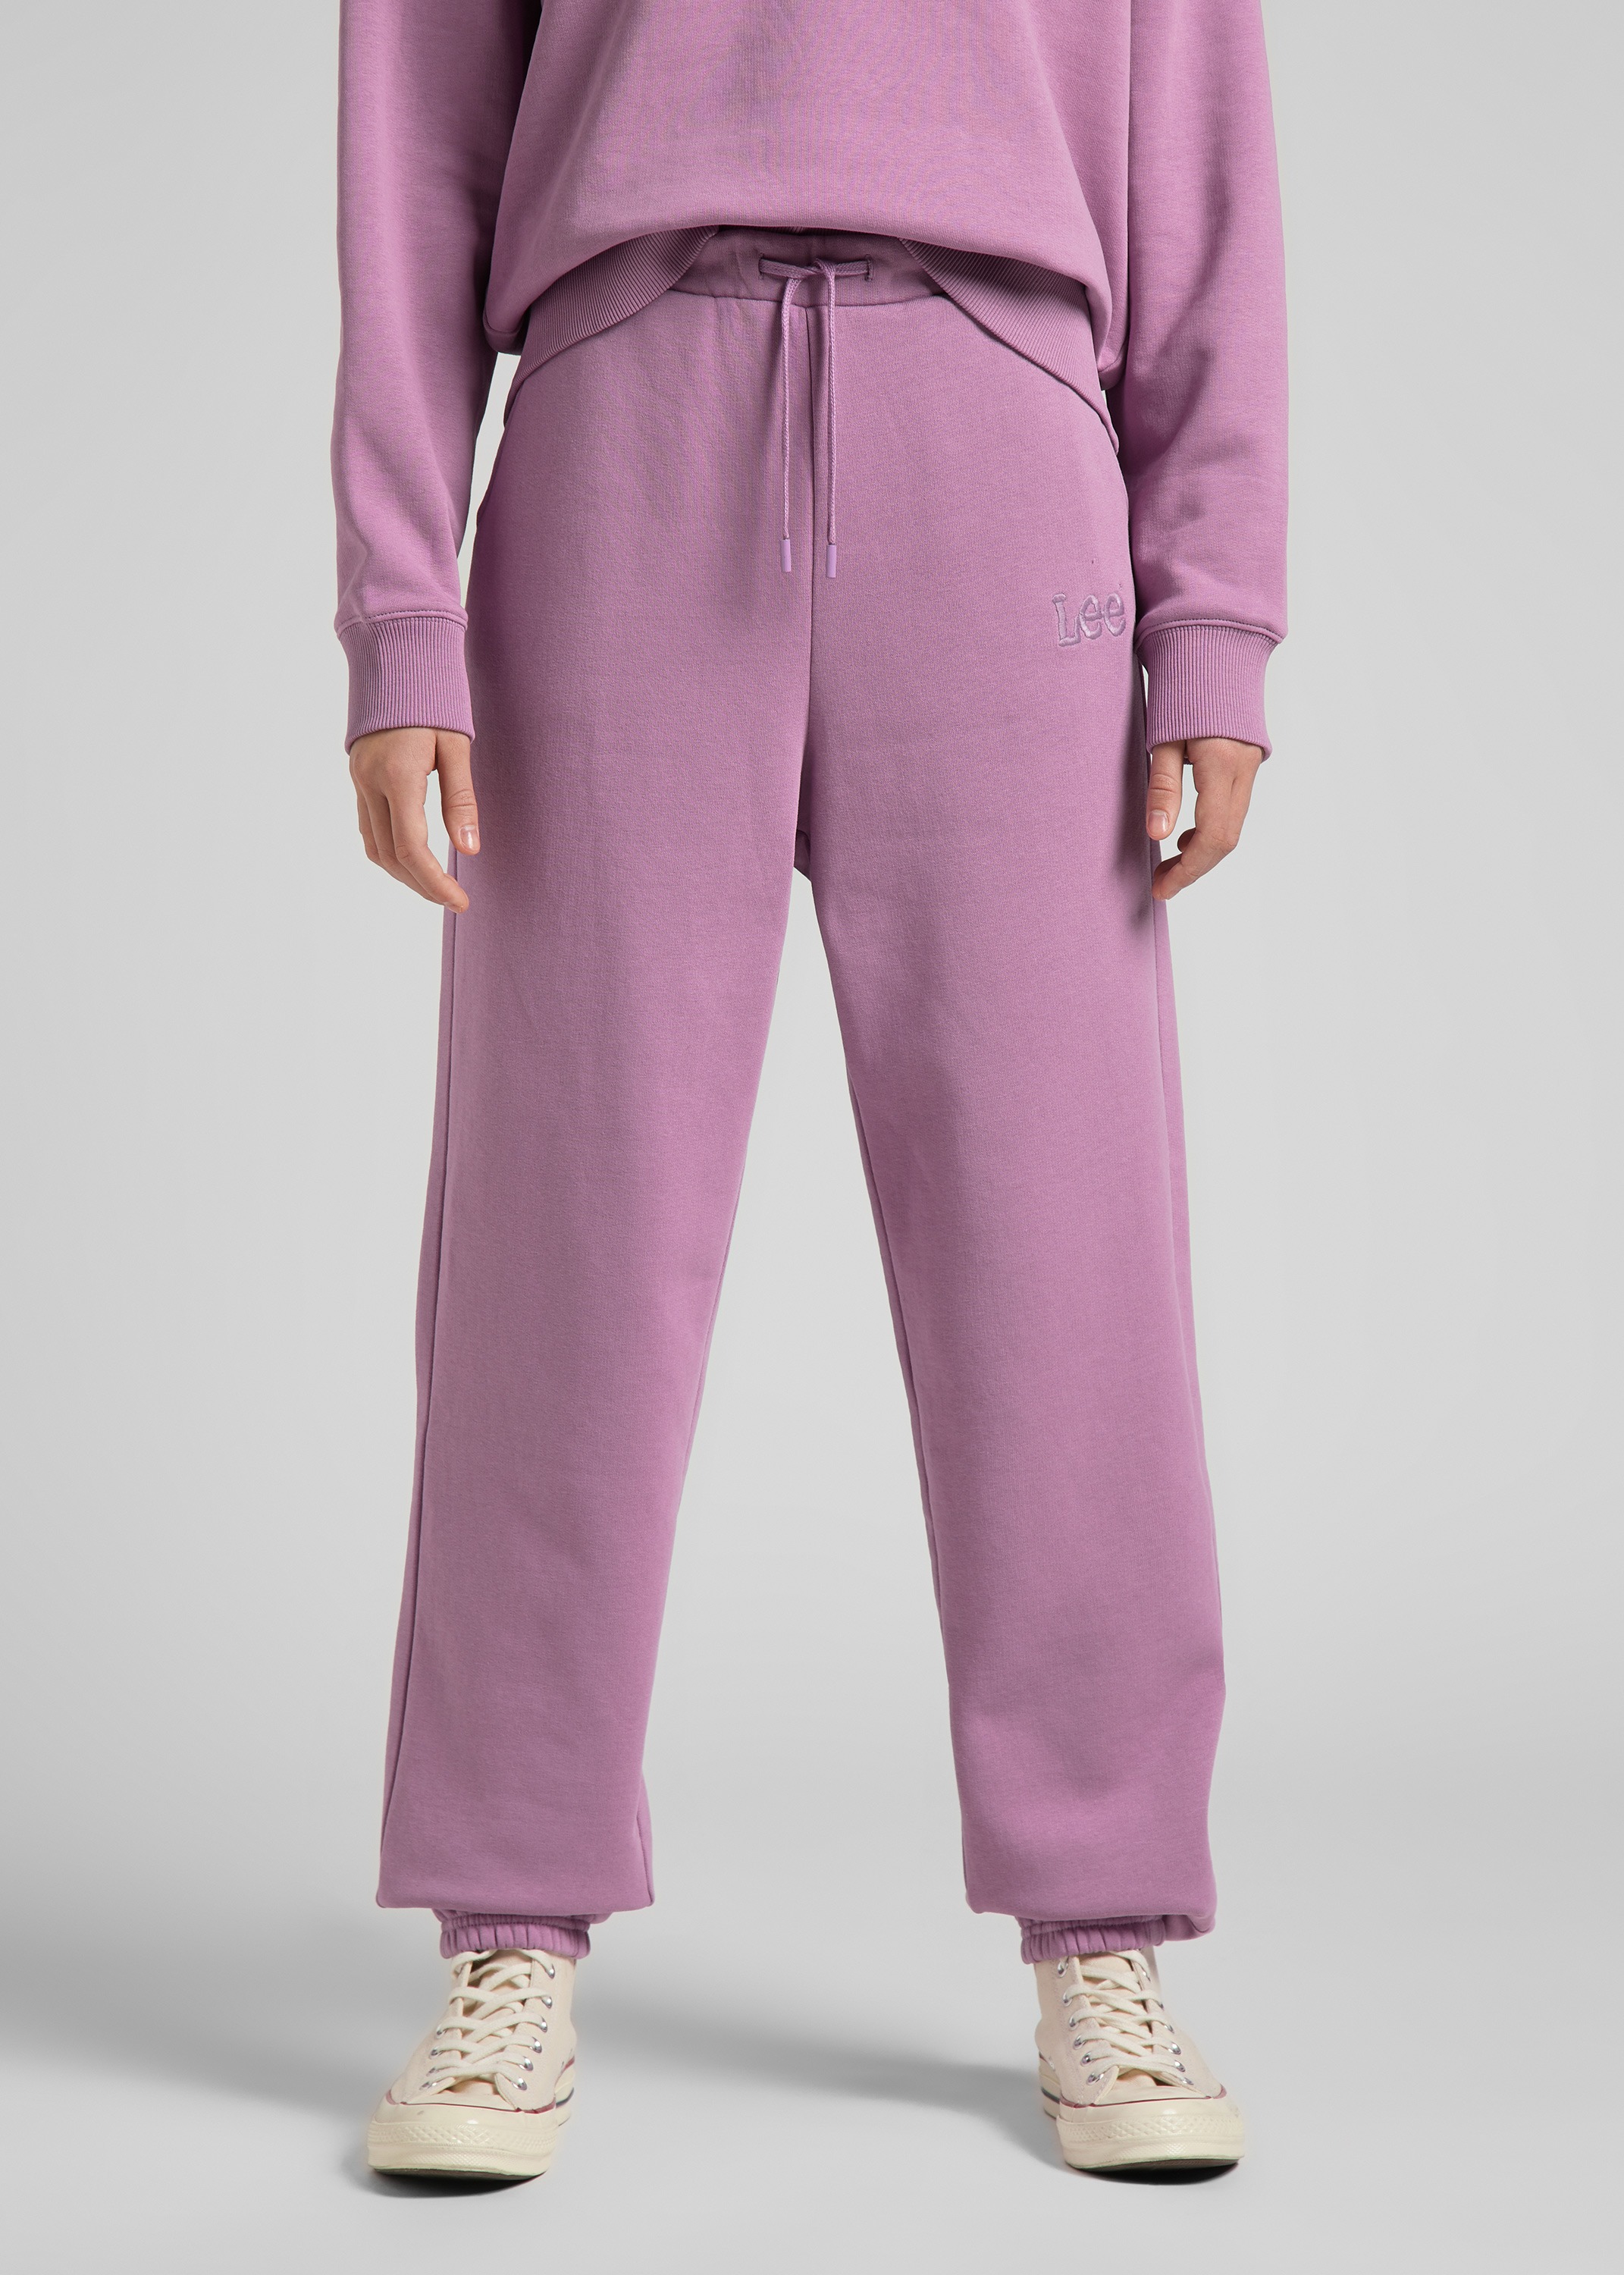 фото Спортивные брюки женские lee relaxed sweatpants розовые xs